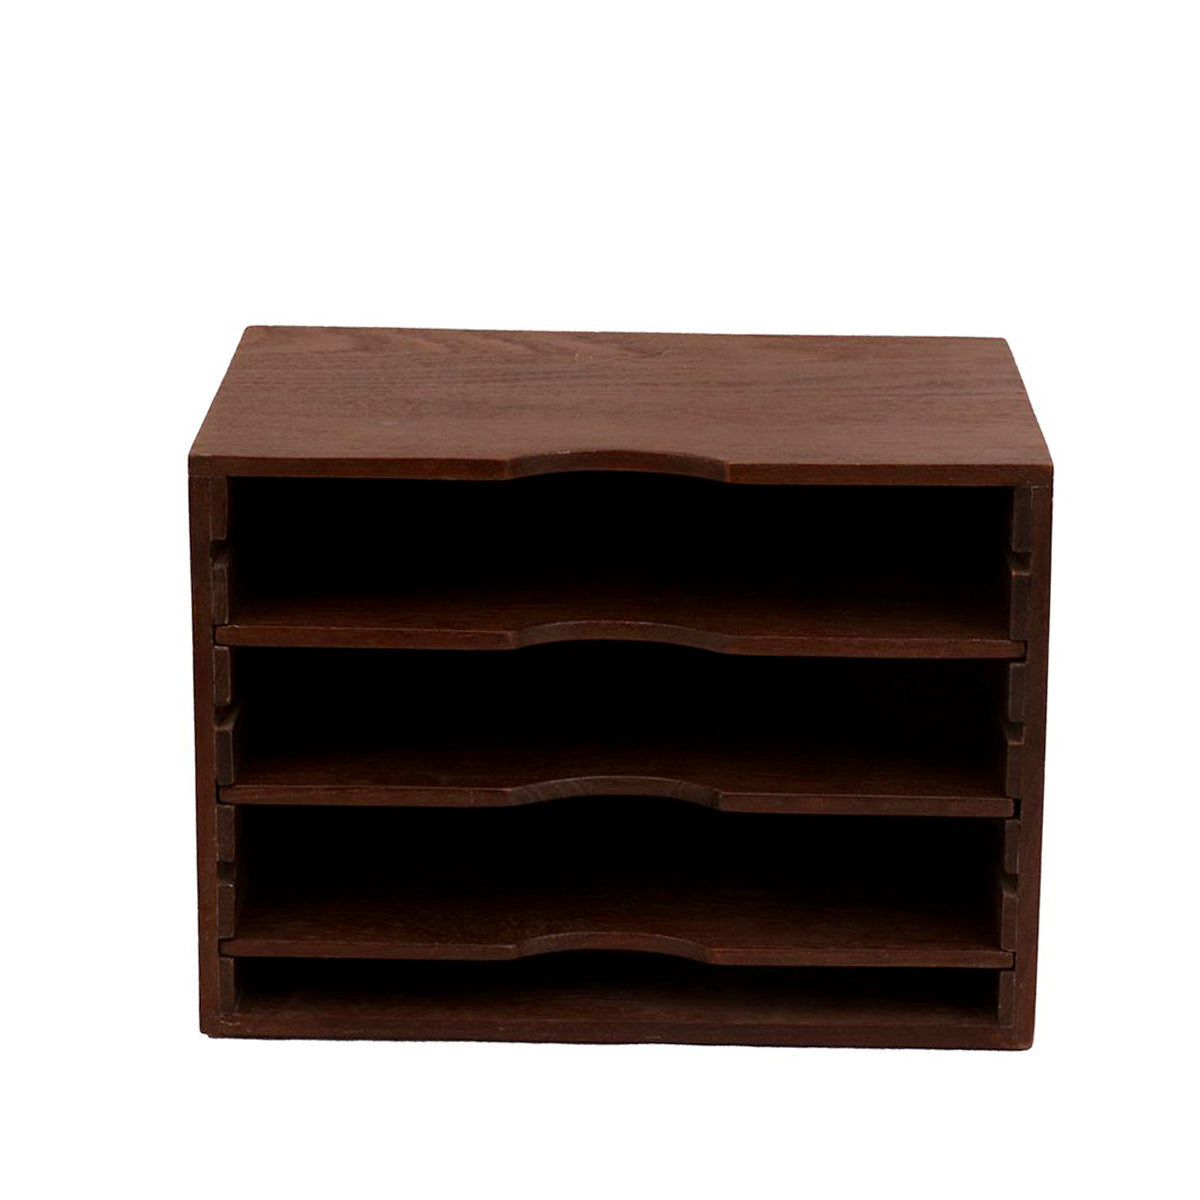 Horizontal Wooden Paper Rack (Dark Tone) Desk Organizer